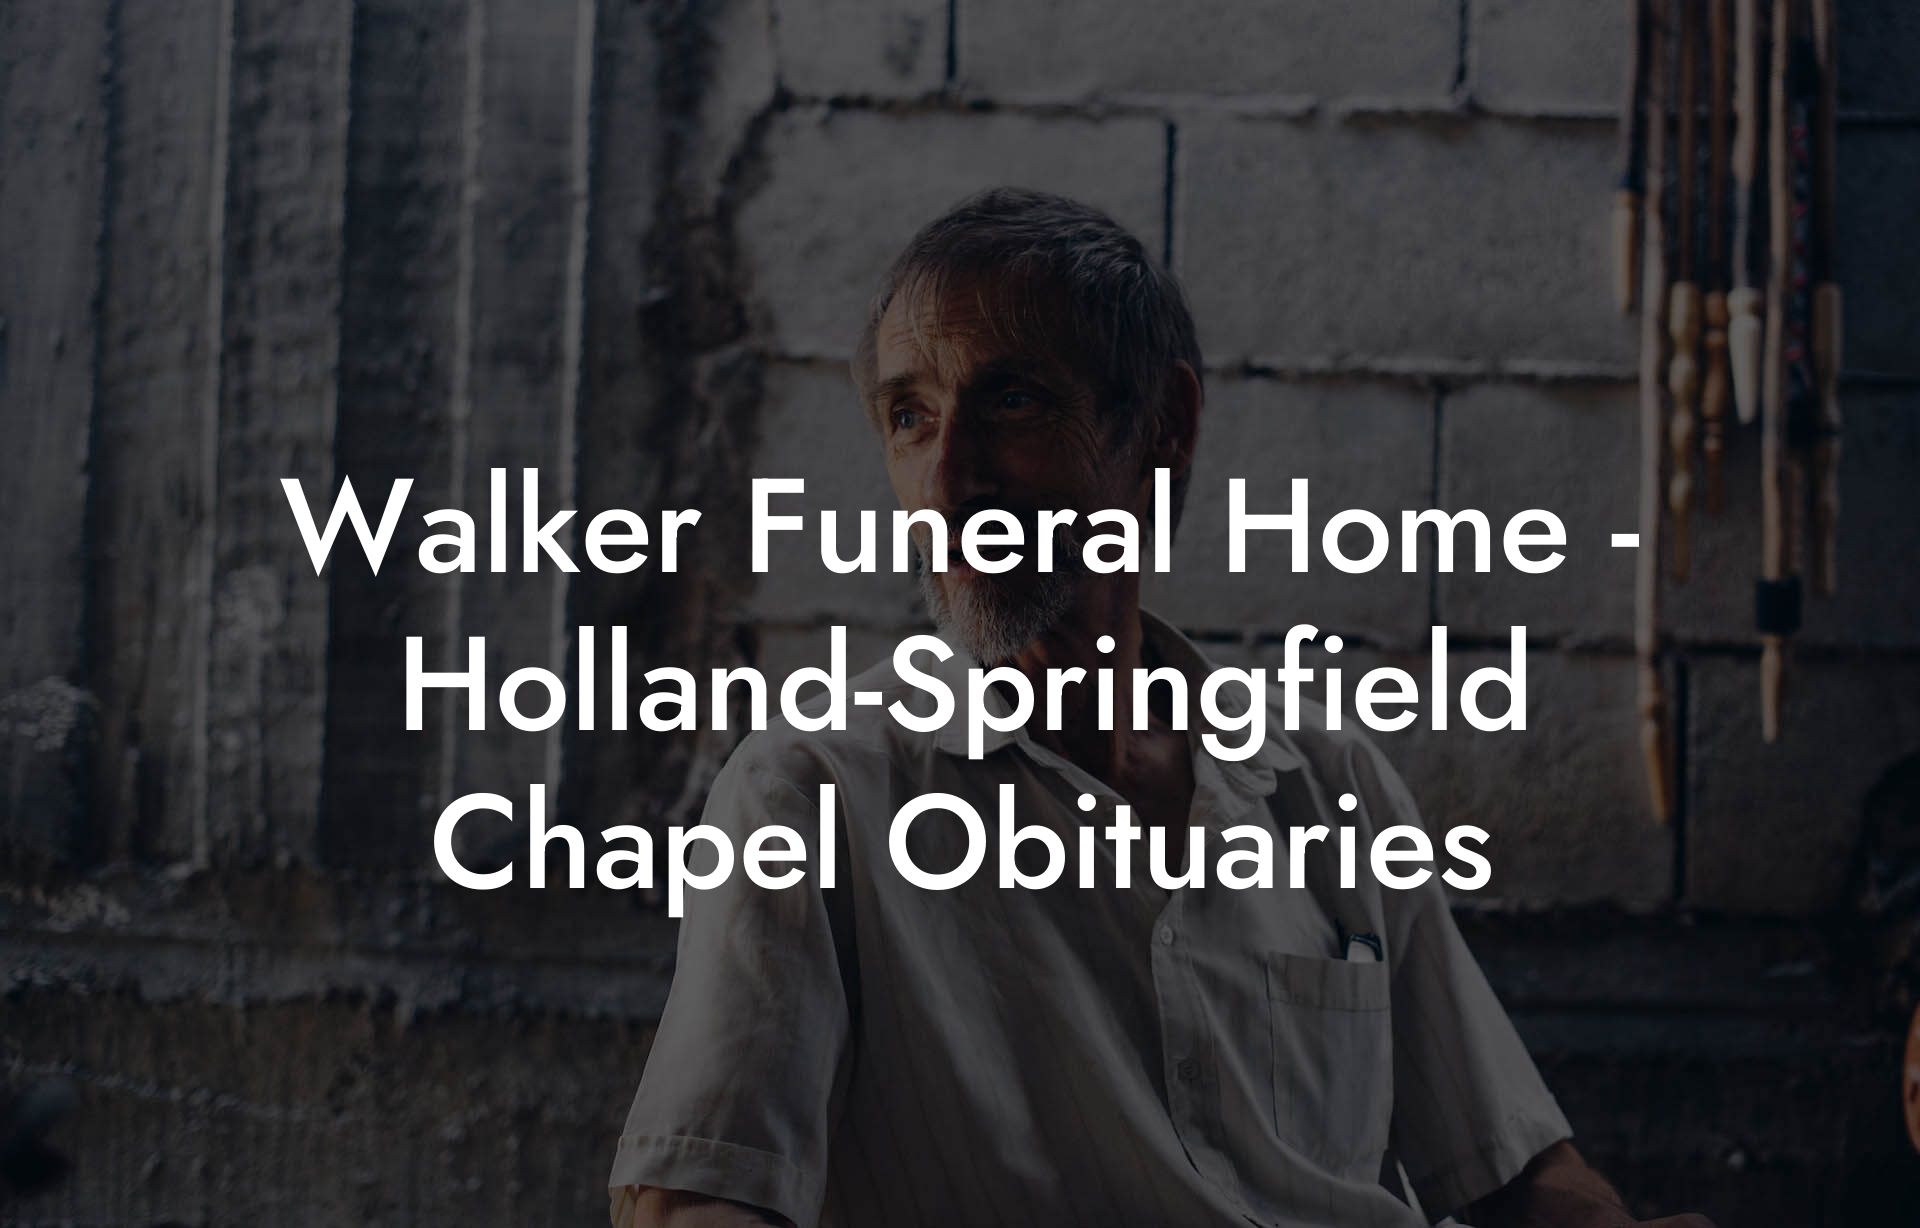 Walker Funeral Home - Holland-Springfield Chapel Obituaries